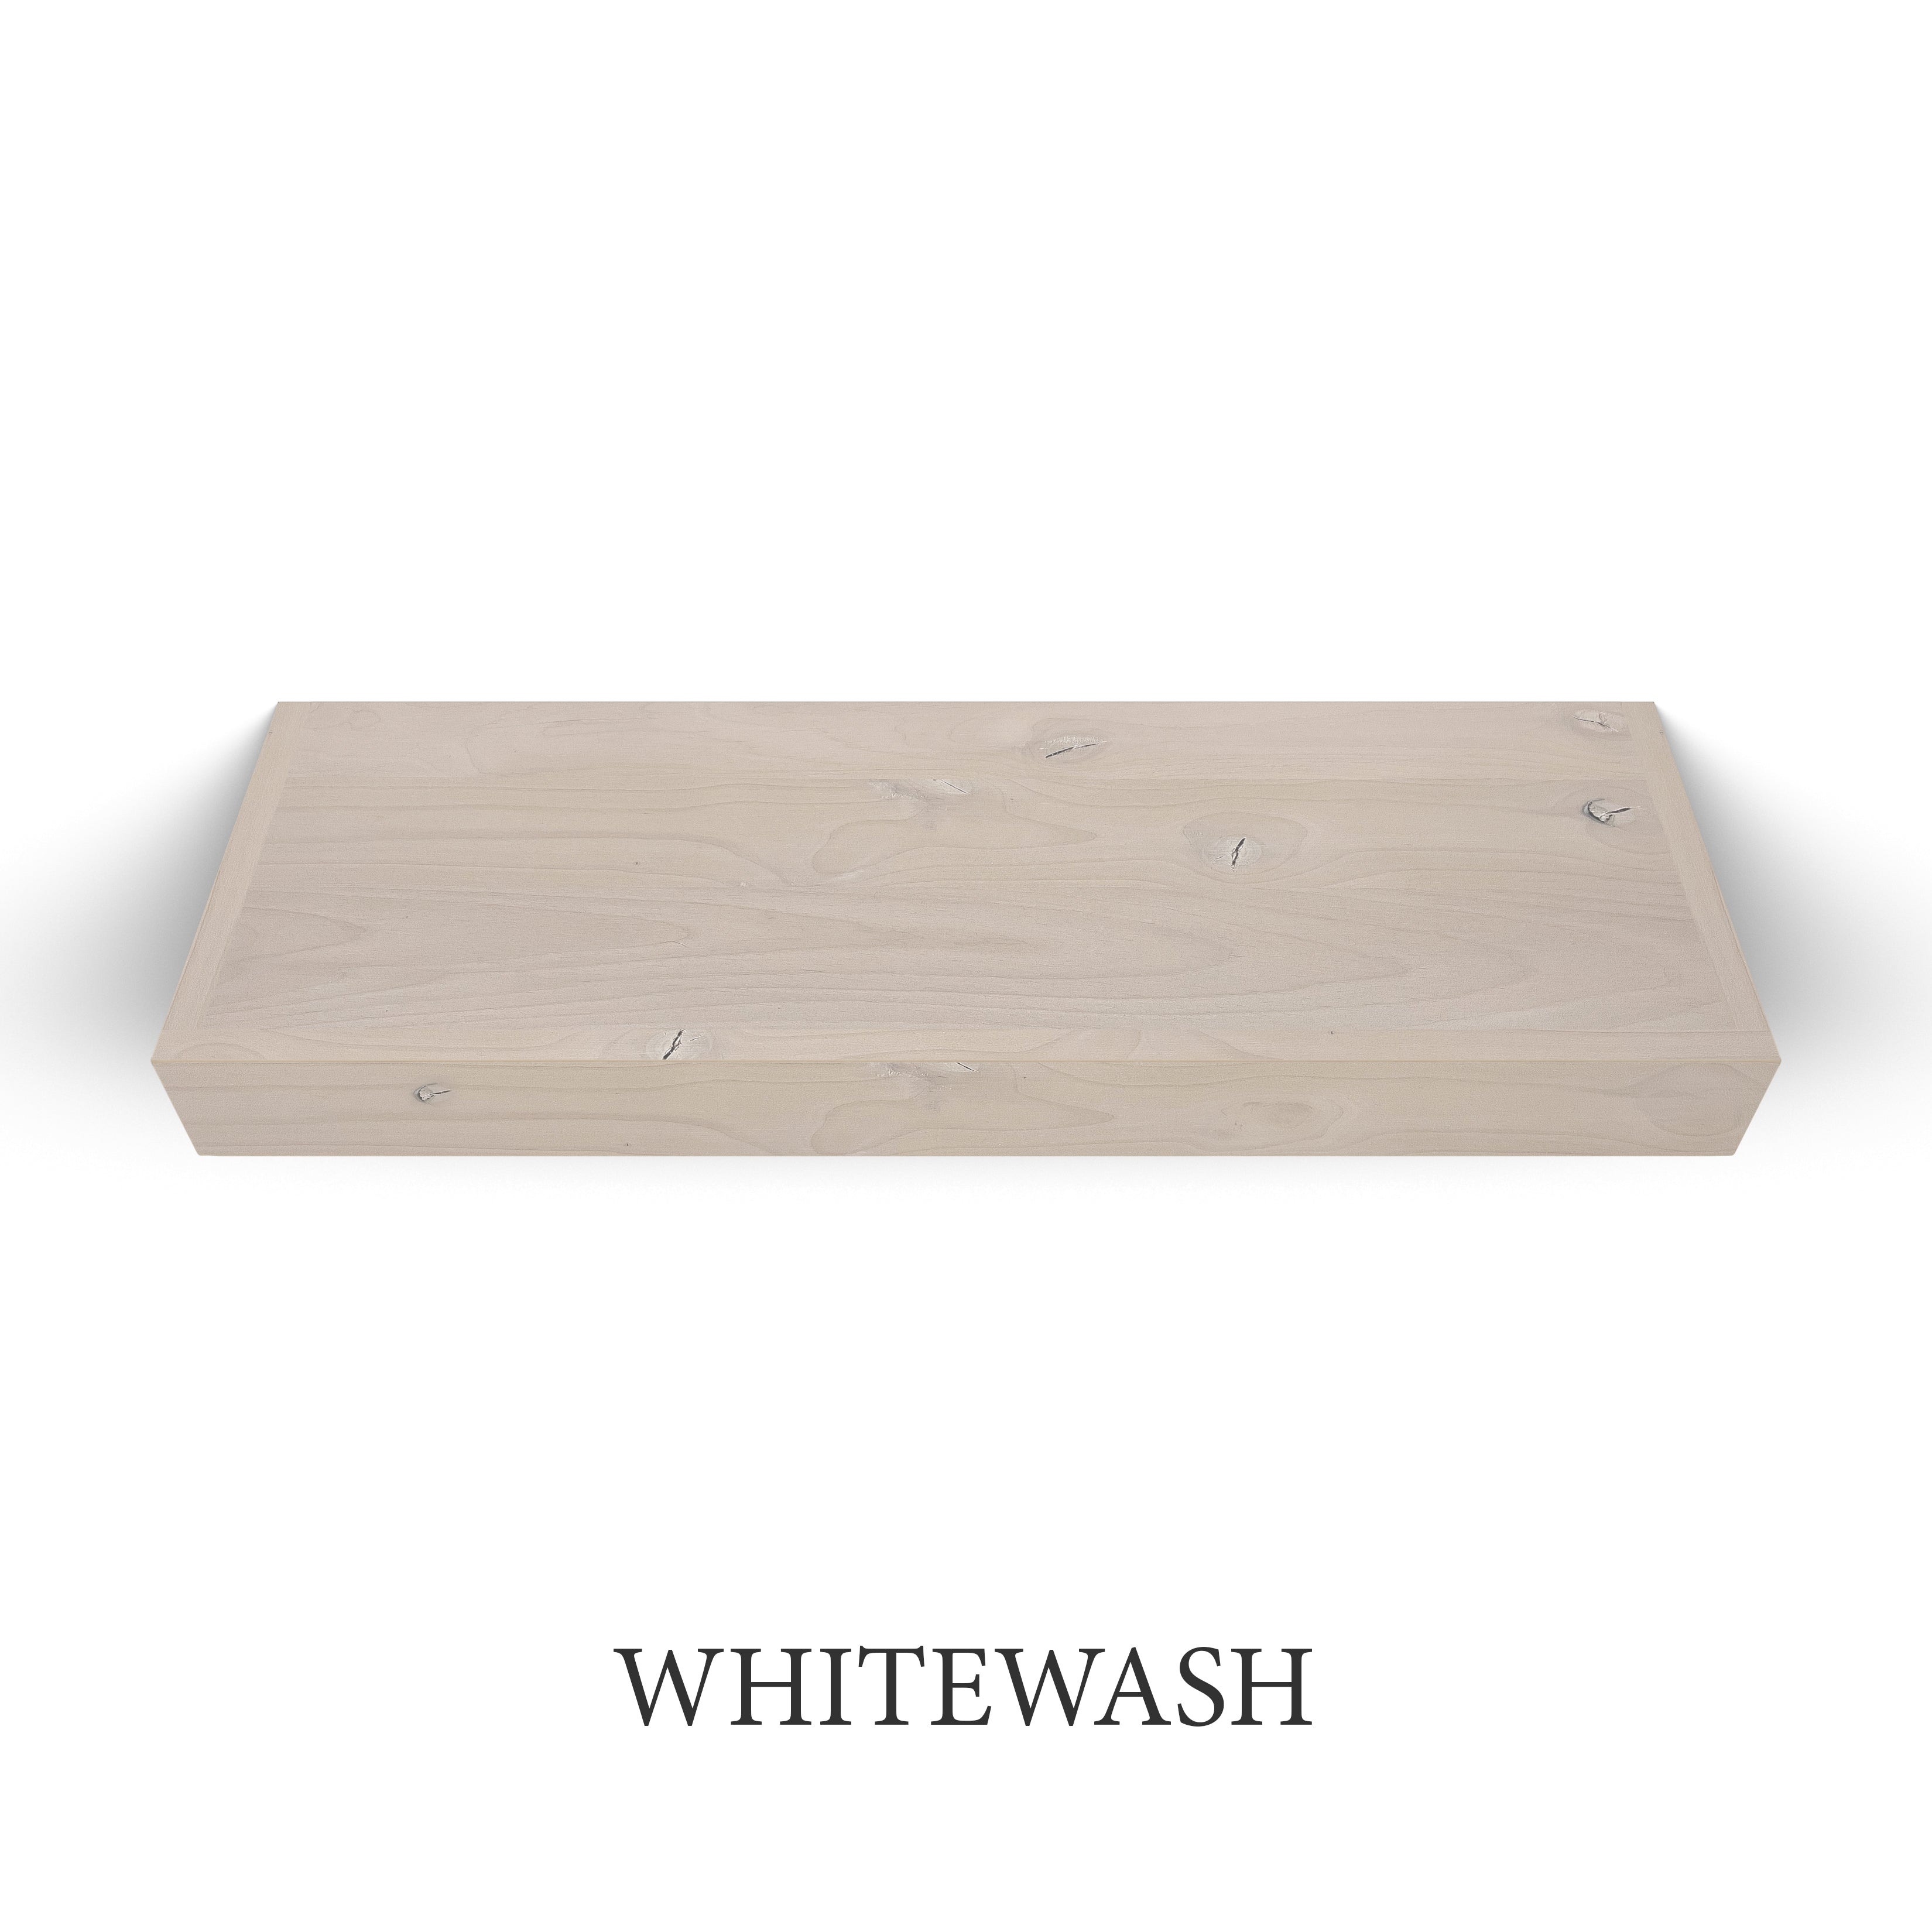 whitewash Rustic Alder 3 Inch Thick Floating Shelf